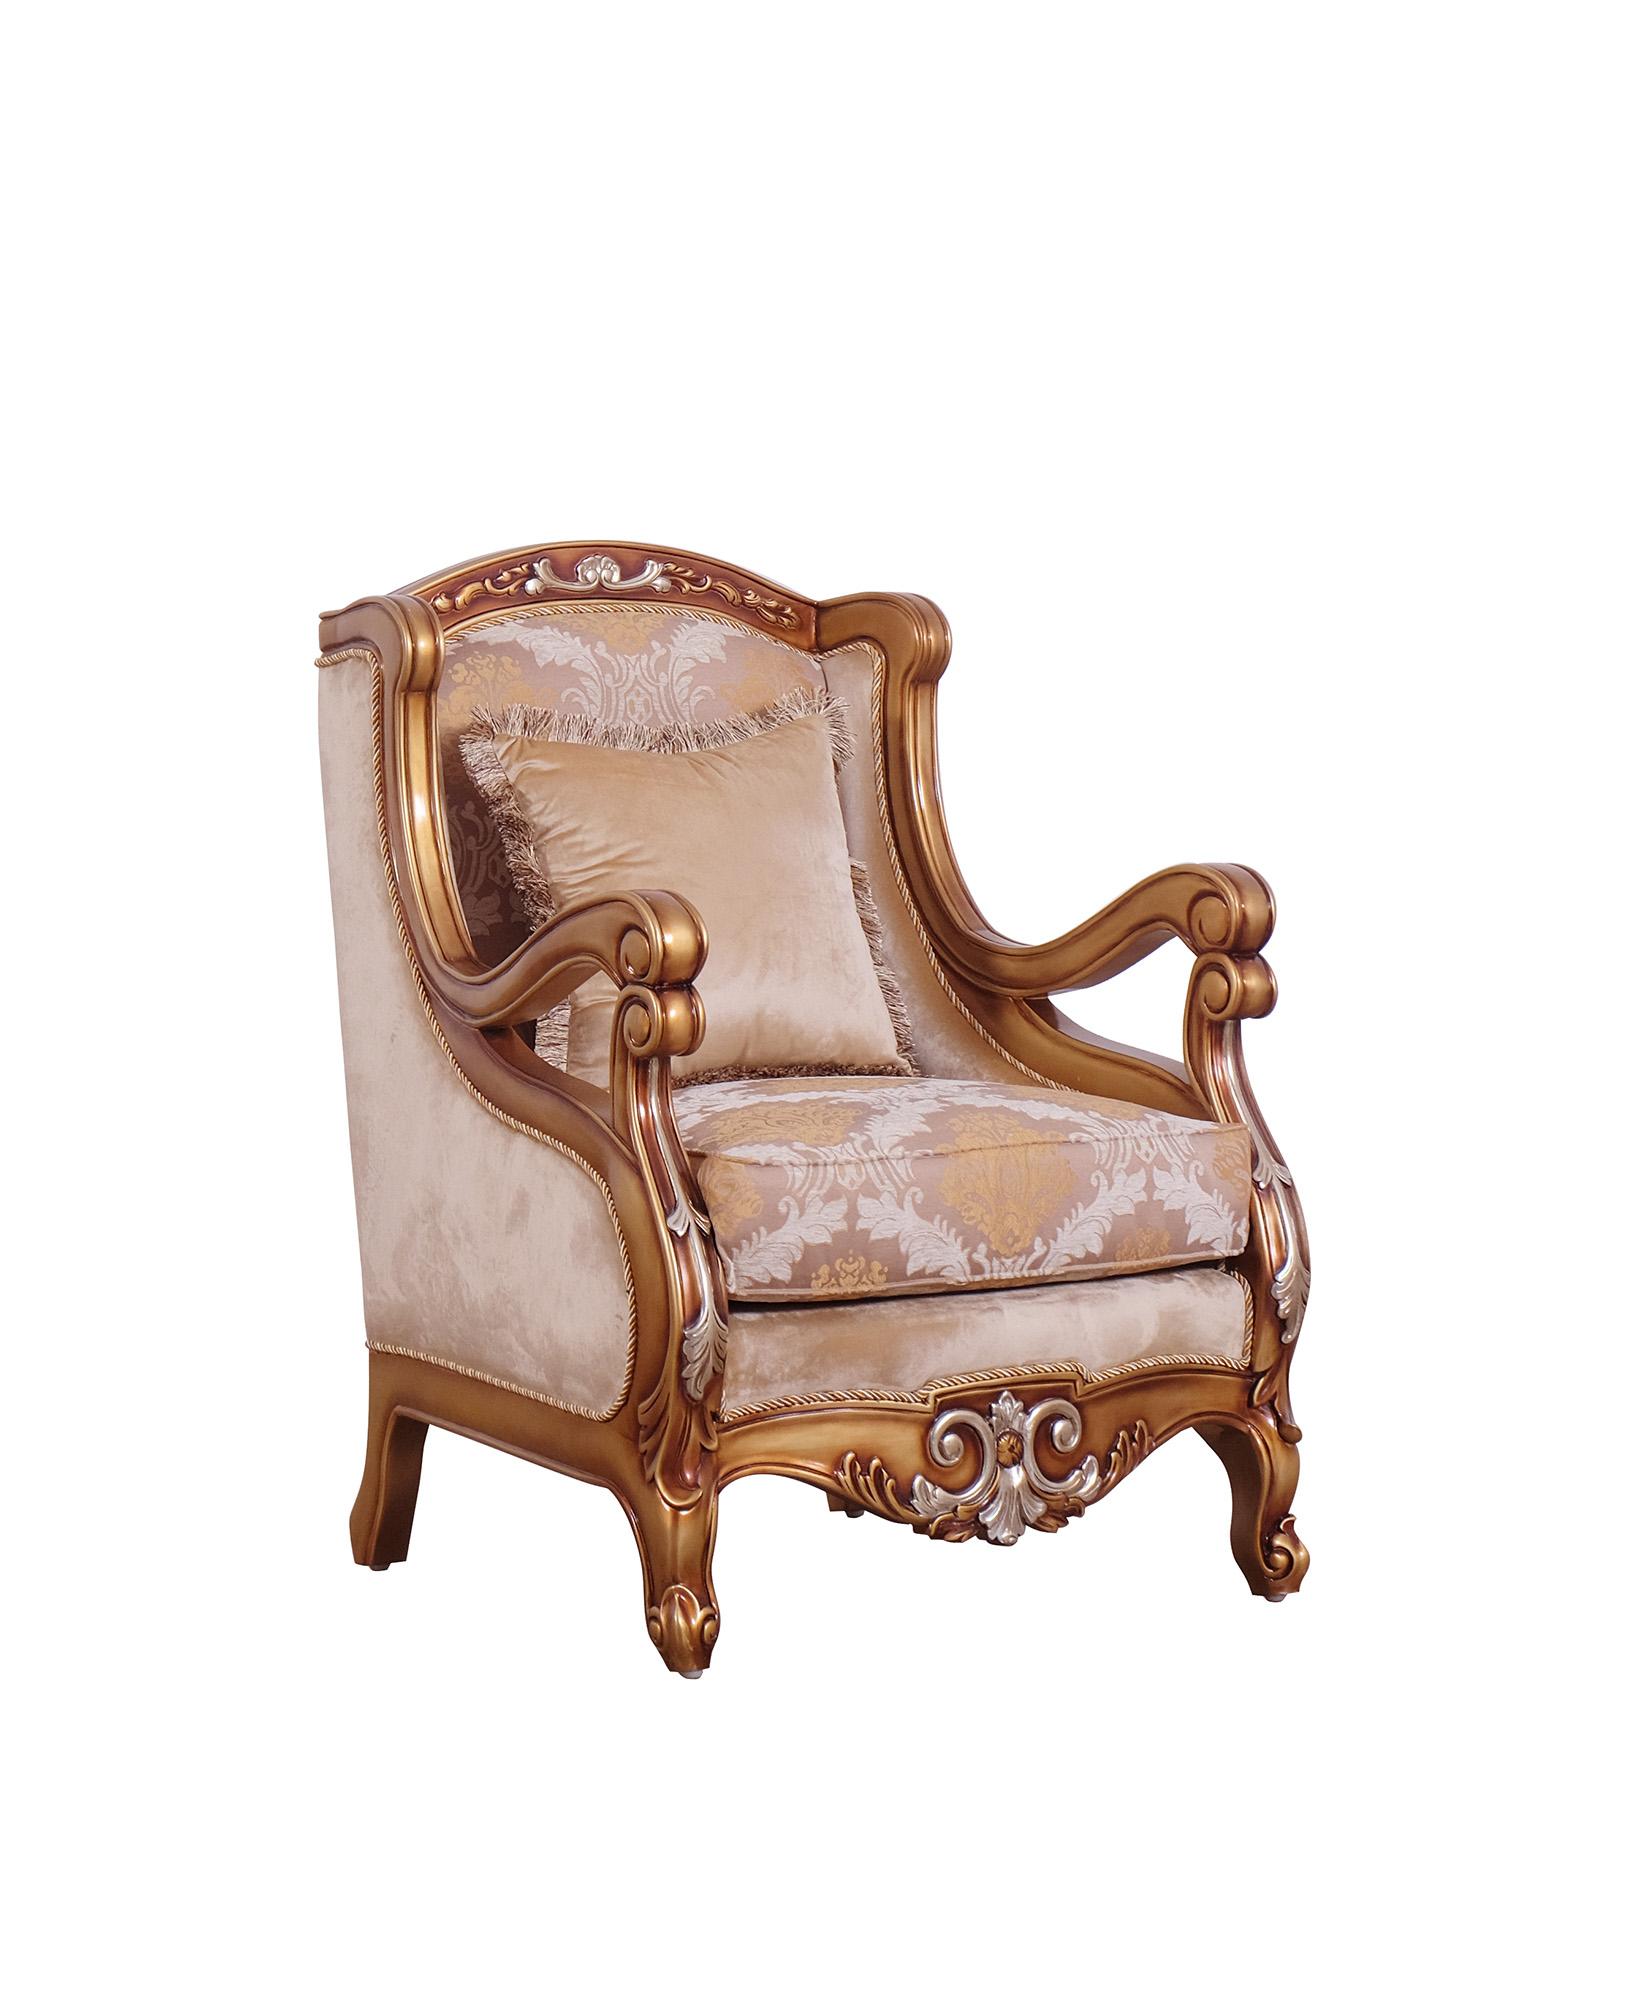 Classic, Traditional Arm Chair RAFFAELLO II 41026-C in Silver, Gold, Brown Fabric